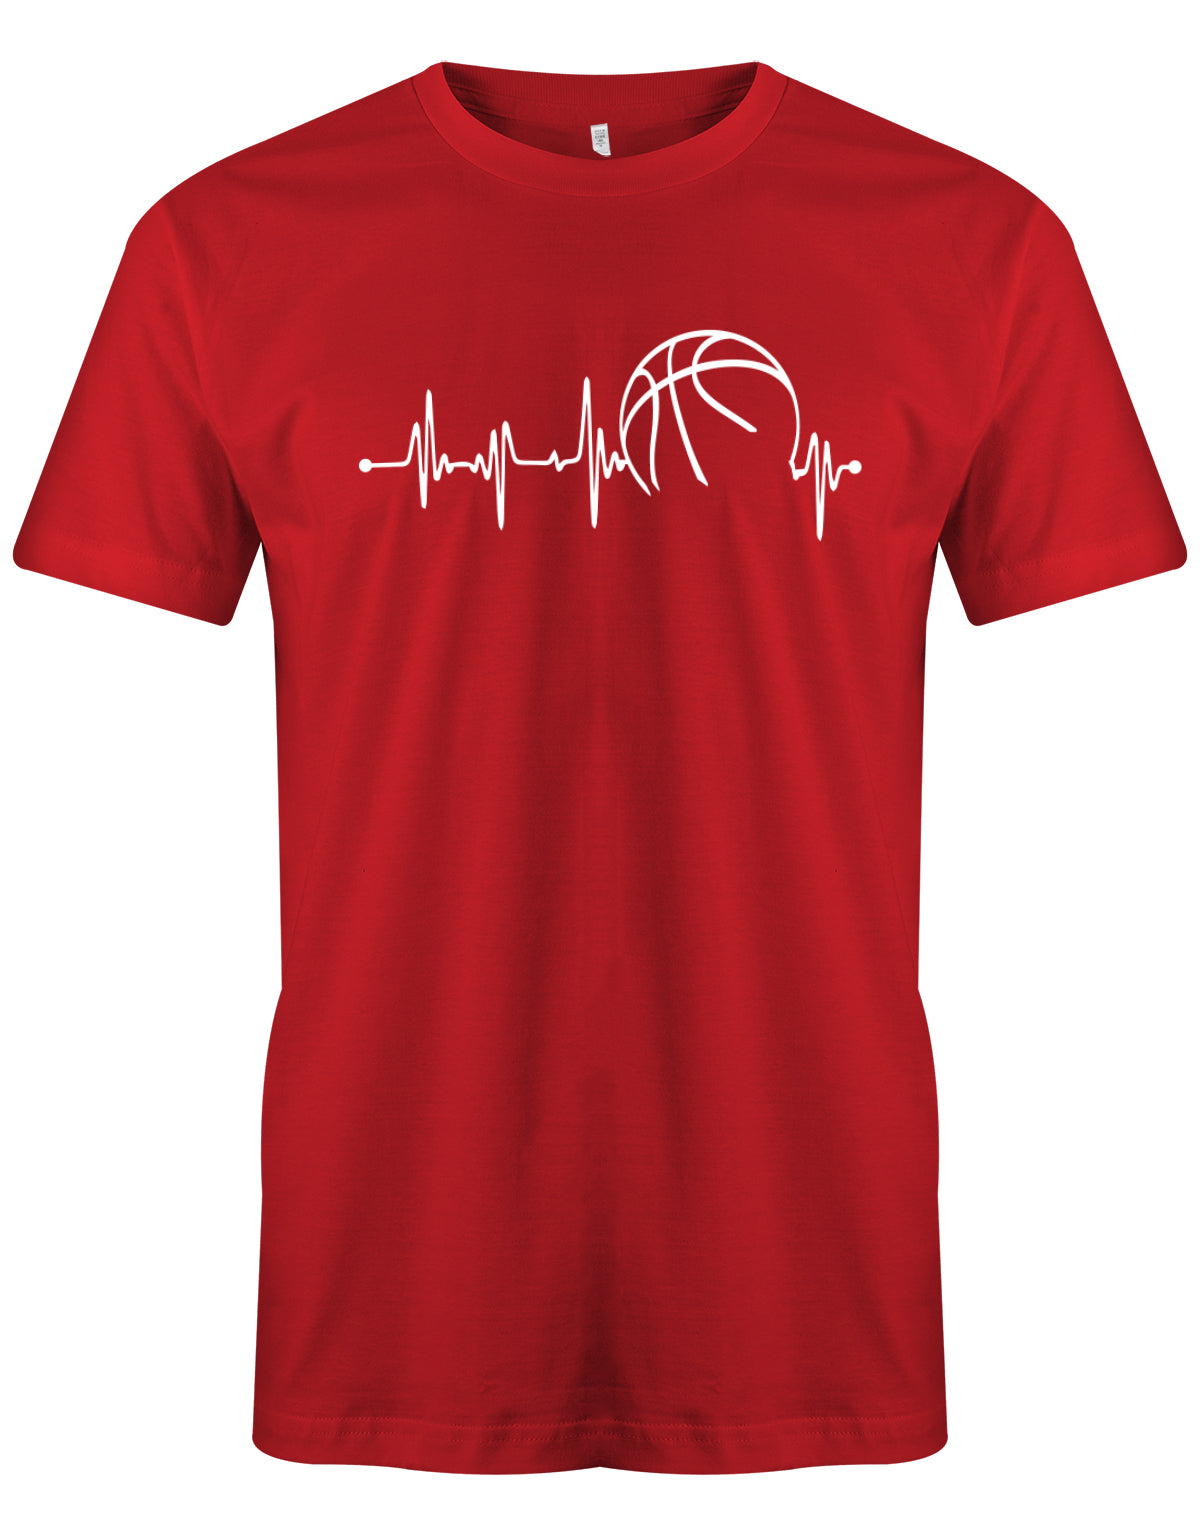 Basketball Motiv Shirt. Herzschlag Basketball - Herzfrequenz schlägt für Basketball. Rot